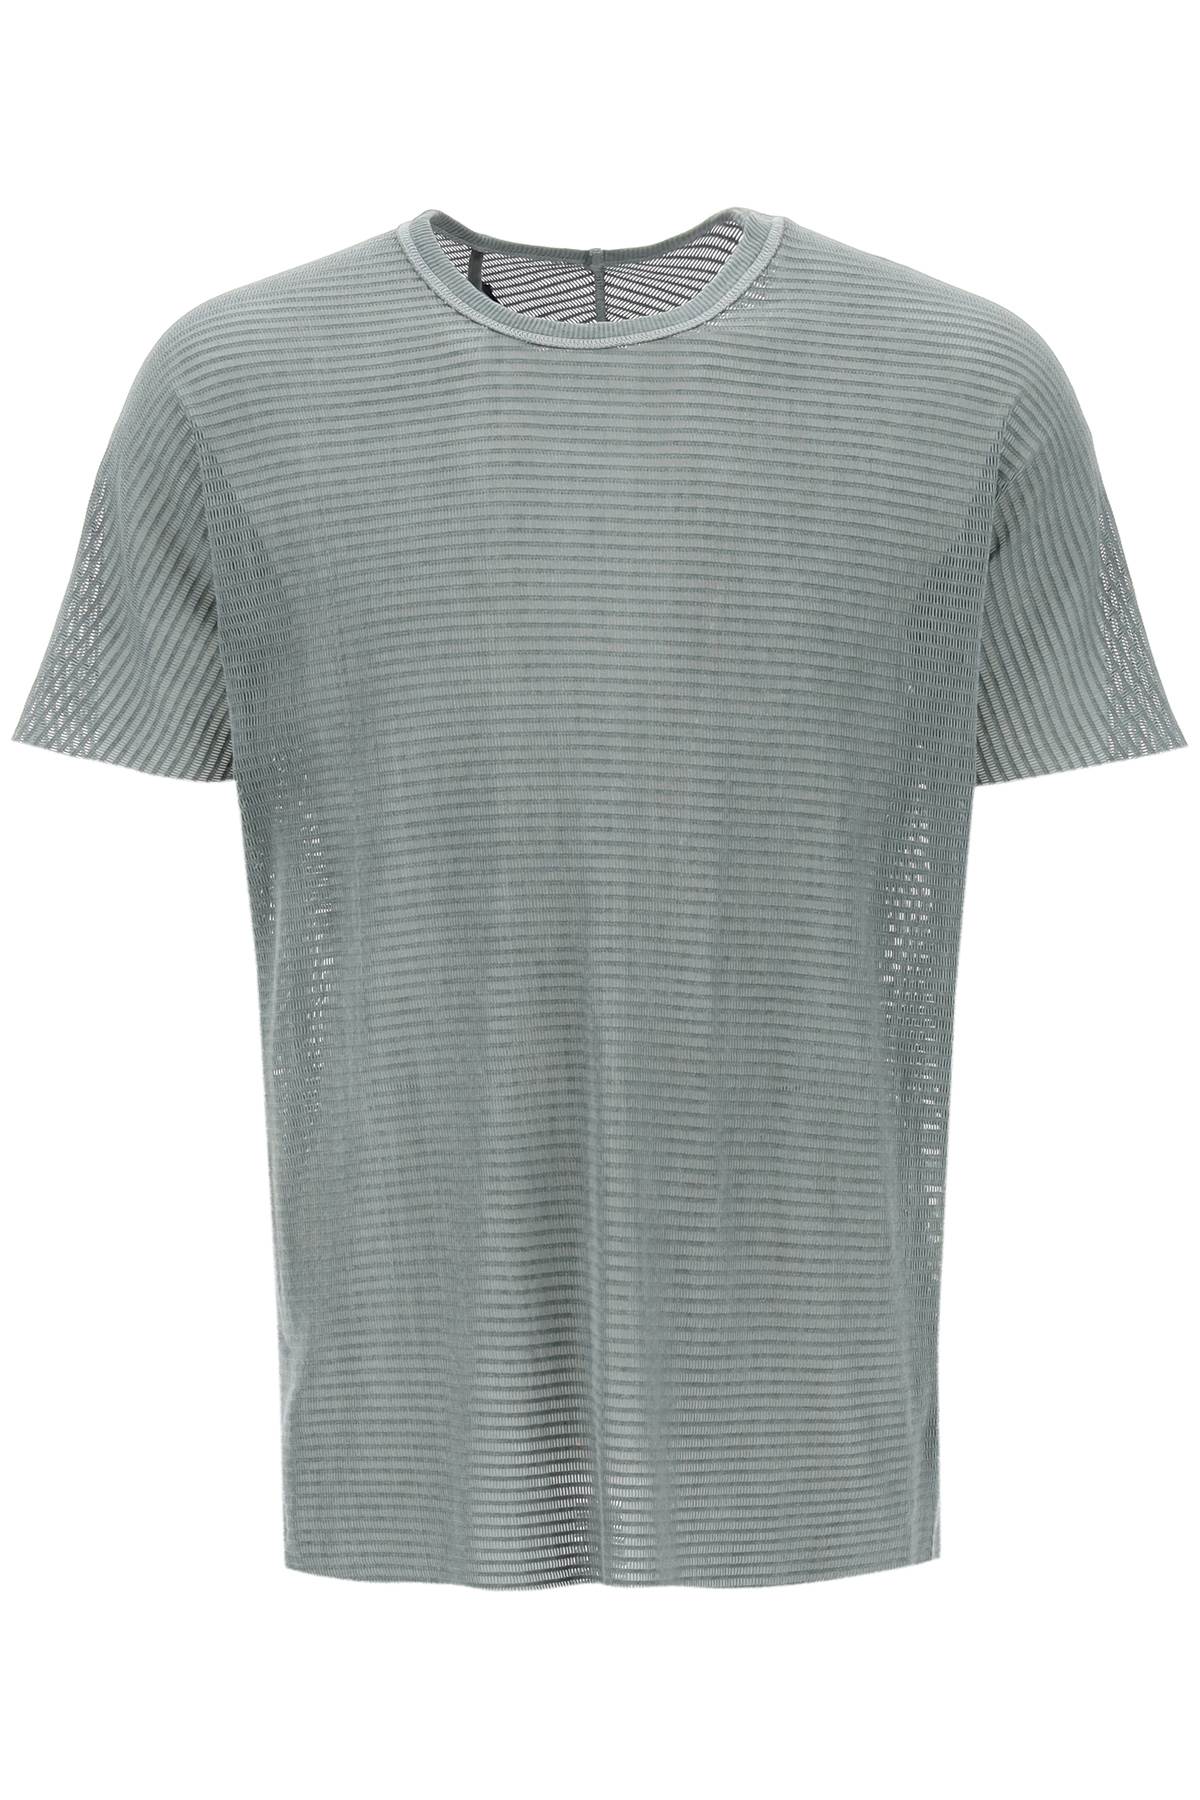 Boris bidjan saberi cotton perforated t-shirt-0